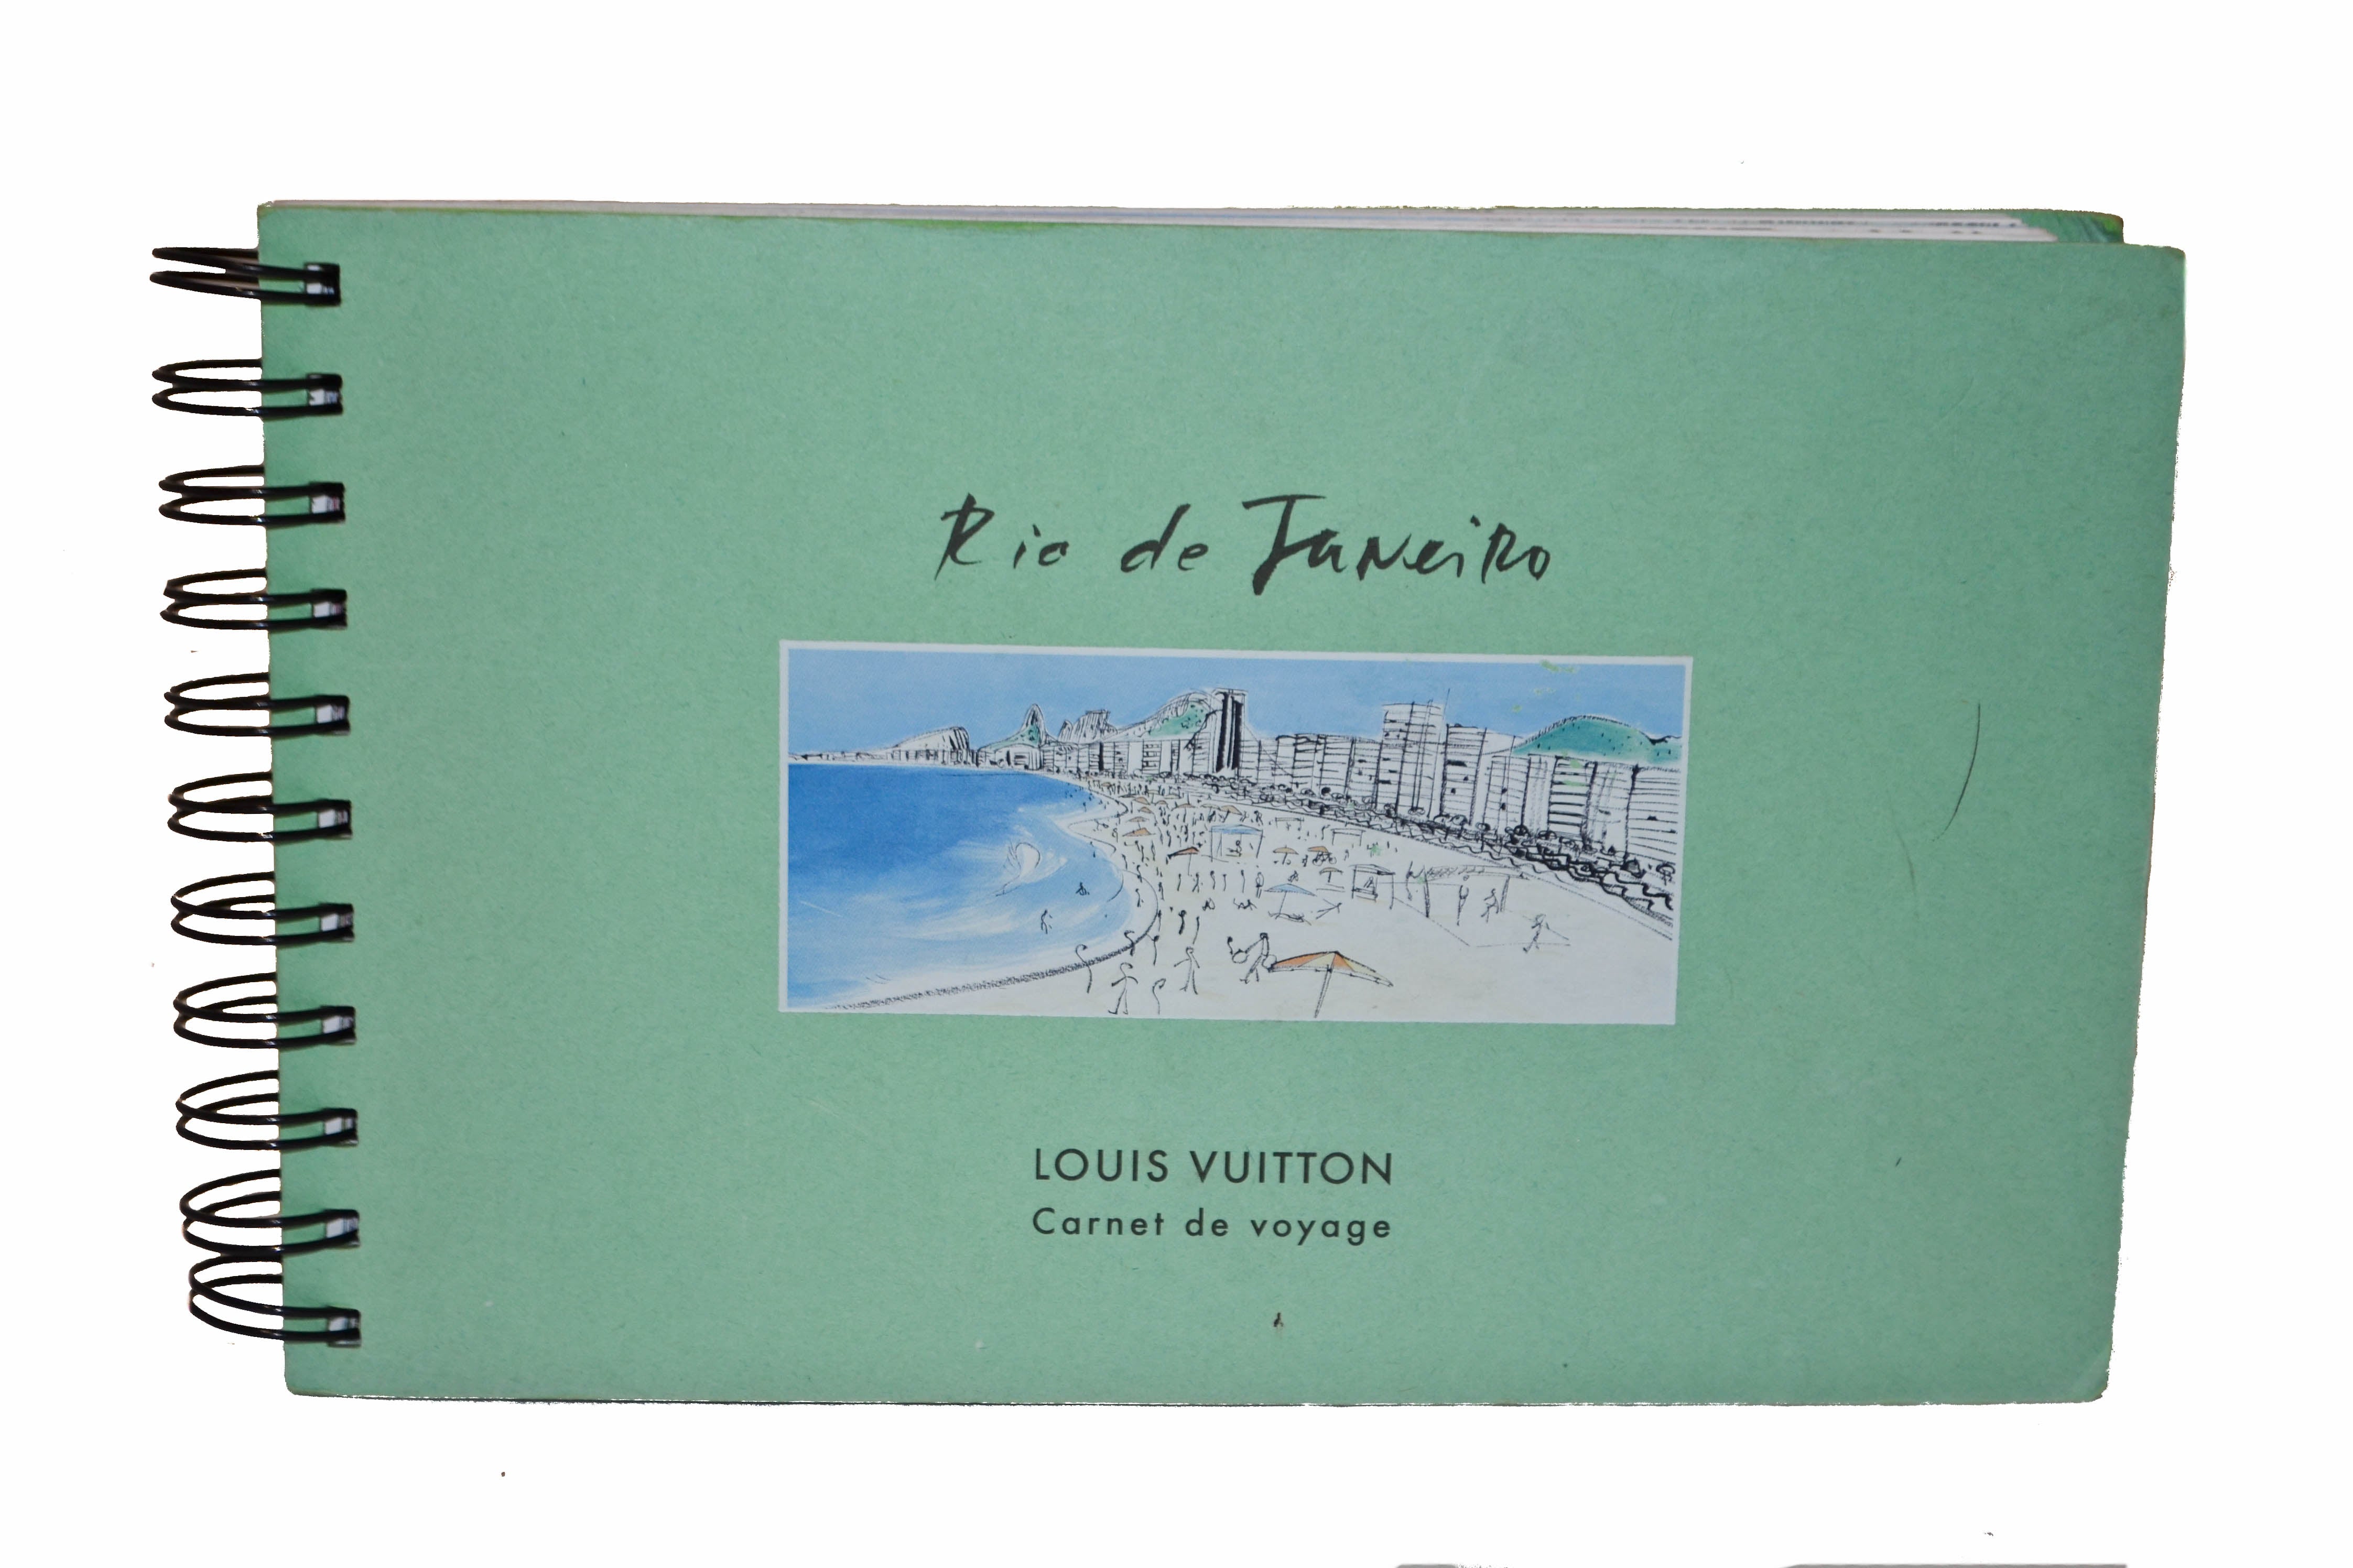 Louis Vuitton's travel diaries